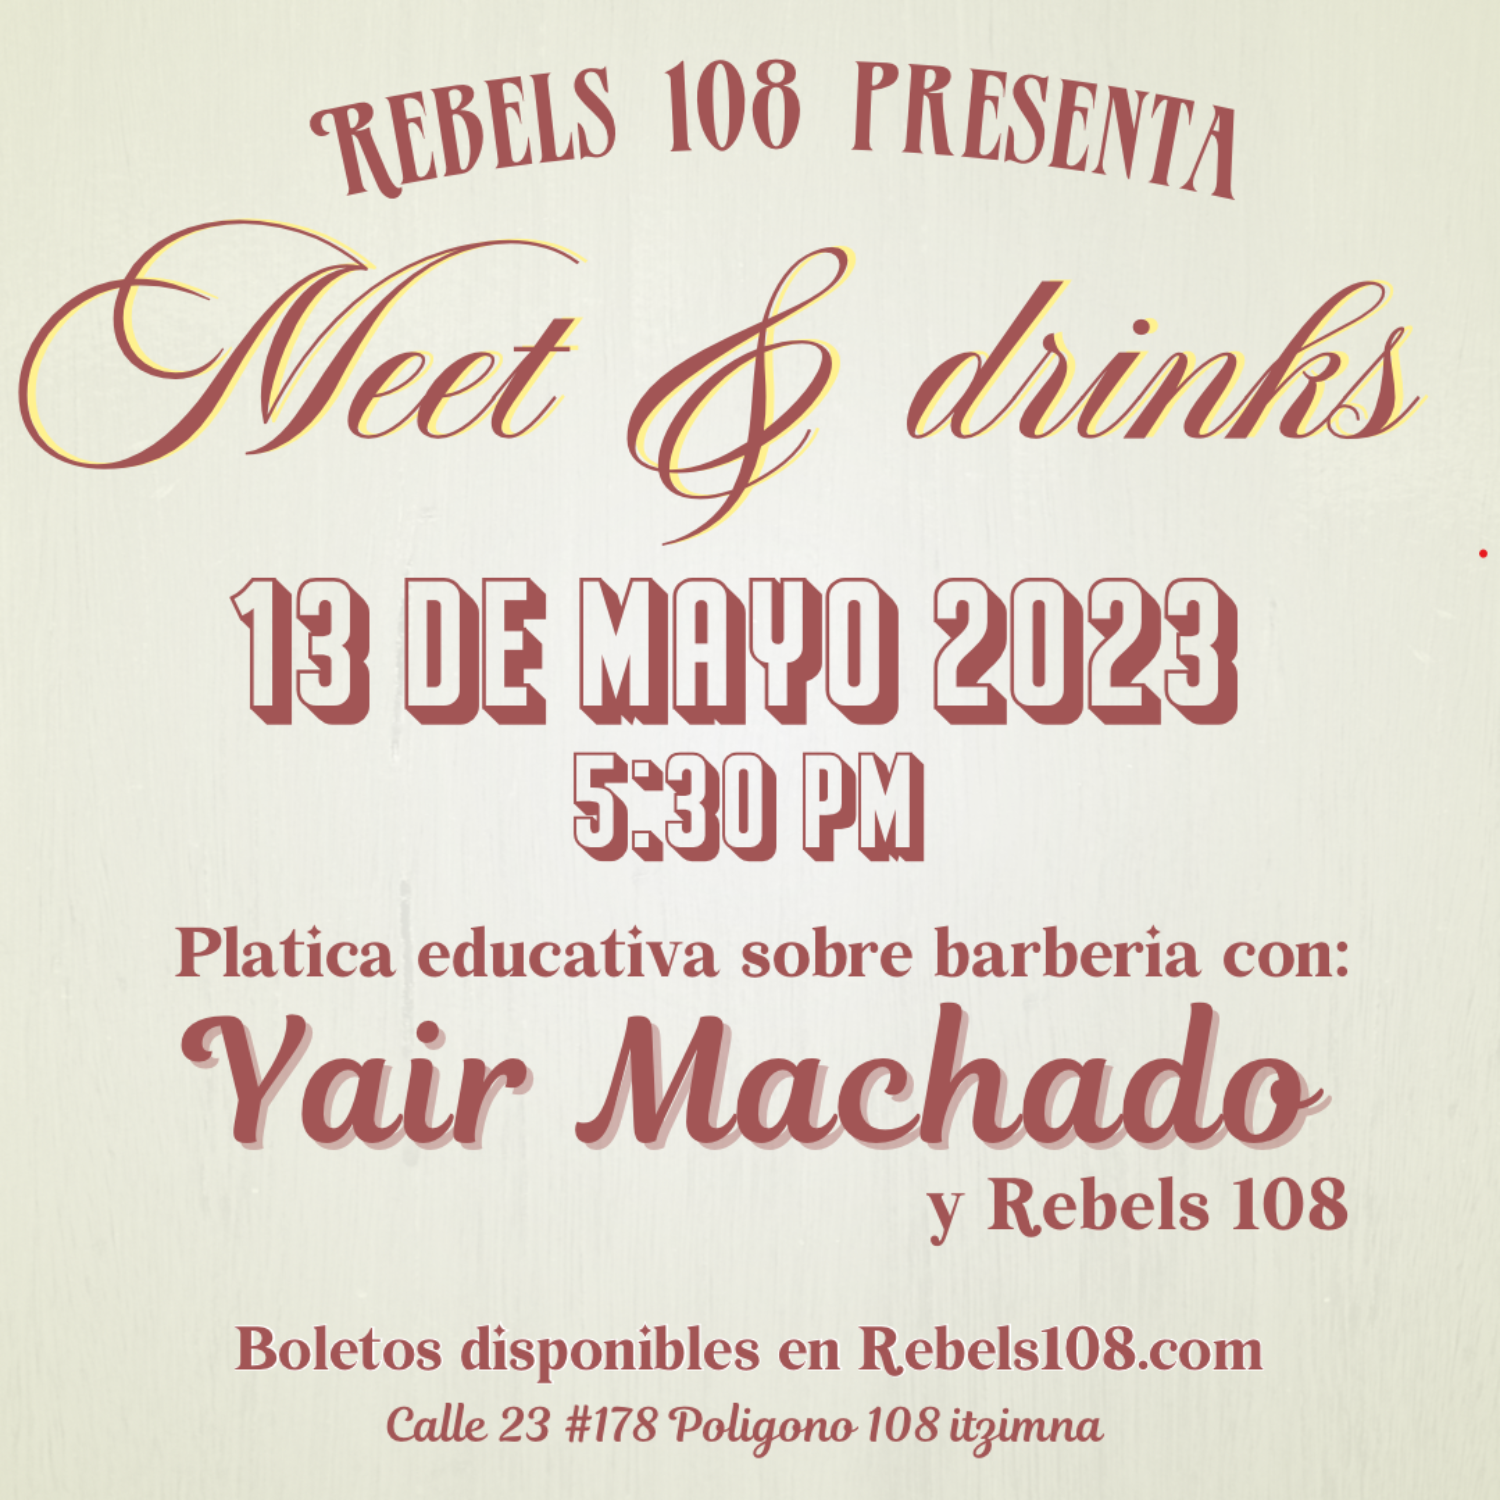 Boletos “Meet and drinks”